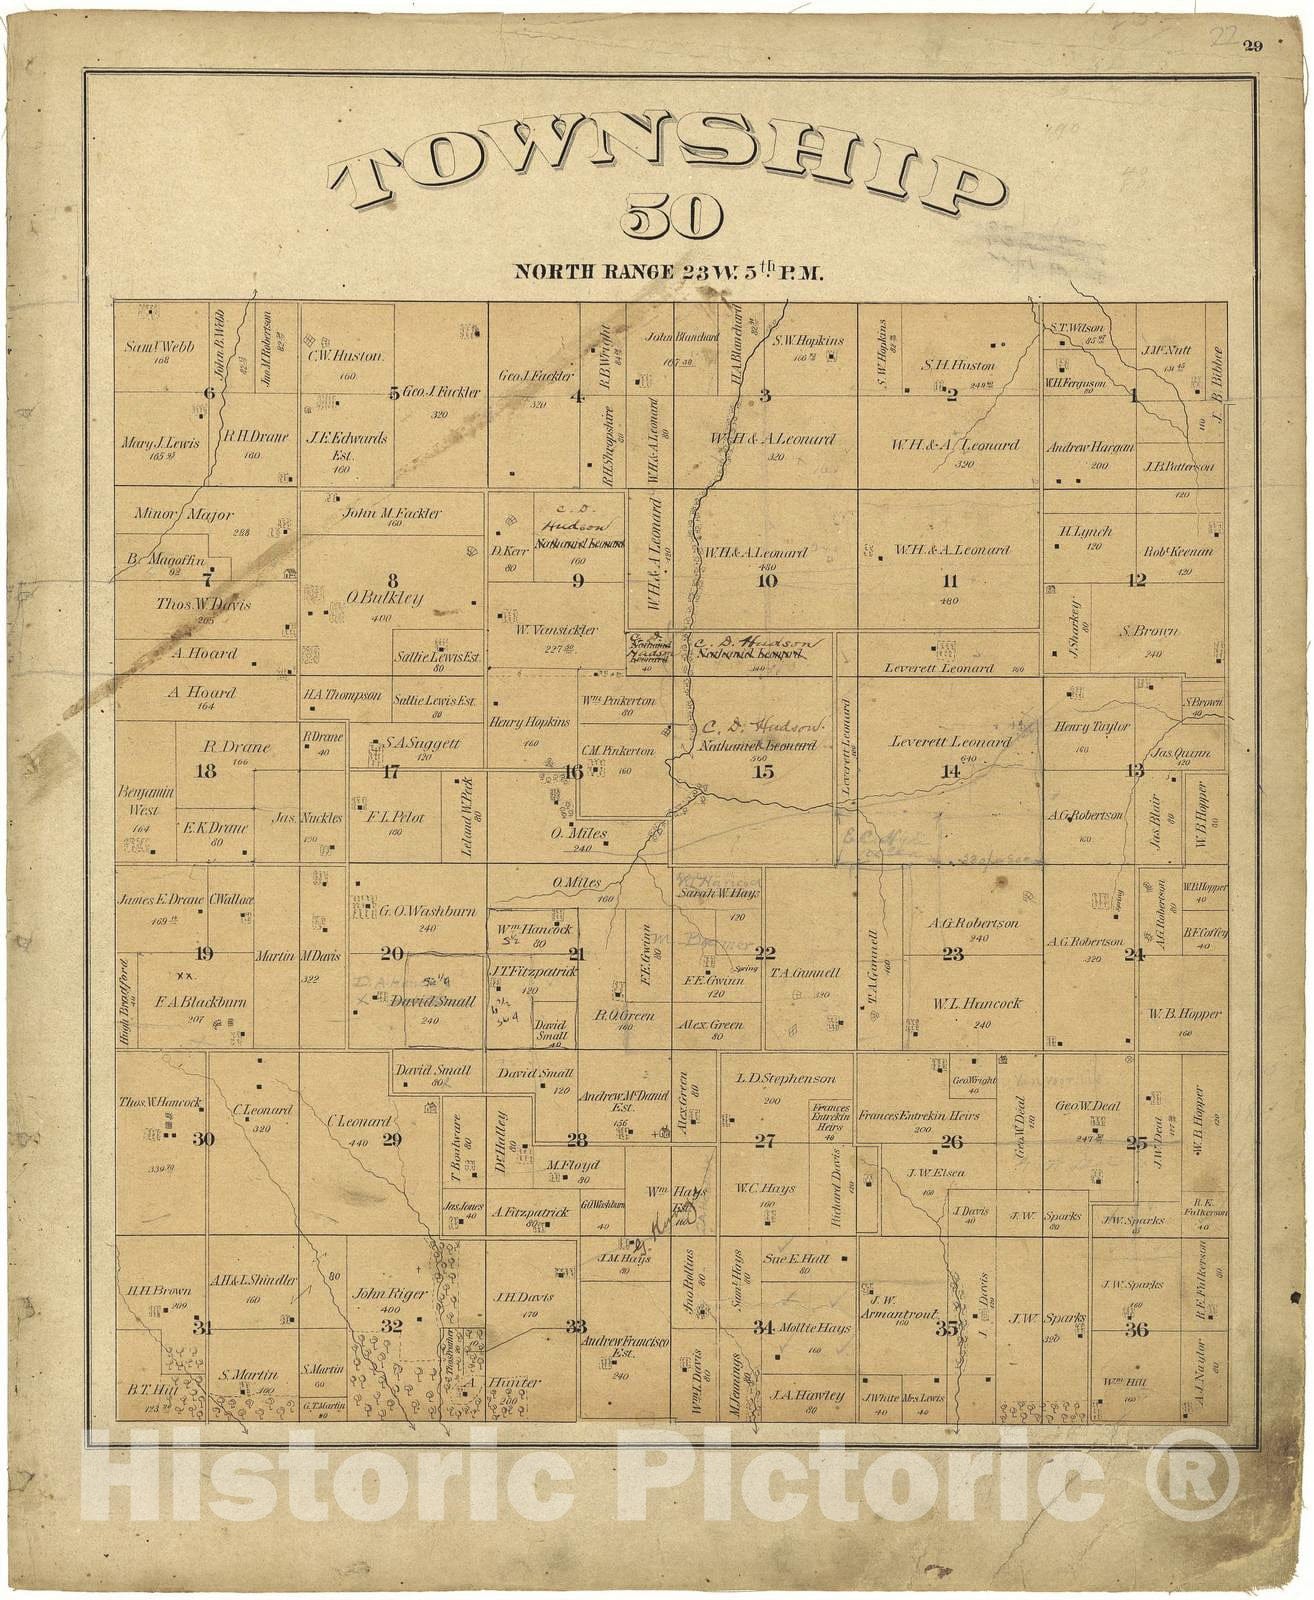 Historic 1876 Map - Township plats : Saline County, Missouri. - Township 50 North, Range 20W. 5th P.M. - Illustrated Atlas map of Saline County, Missouri